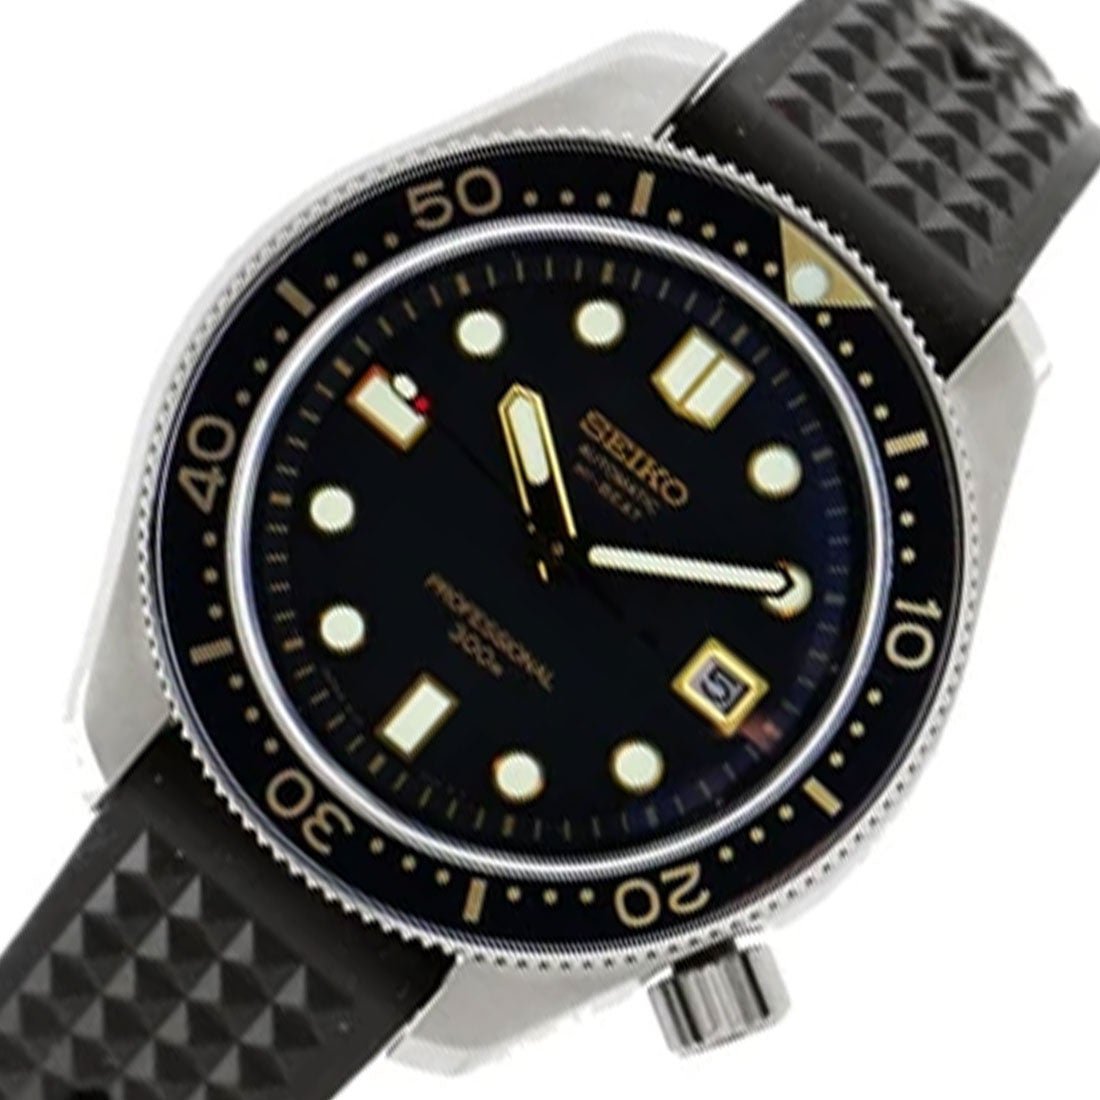 Seiko Prospex Hi-Beat Limited Edition Diving Watch SLA025 SLA025J1 (SBEX007) -Seiko